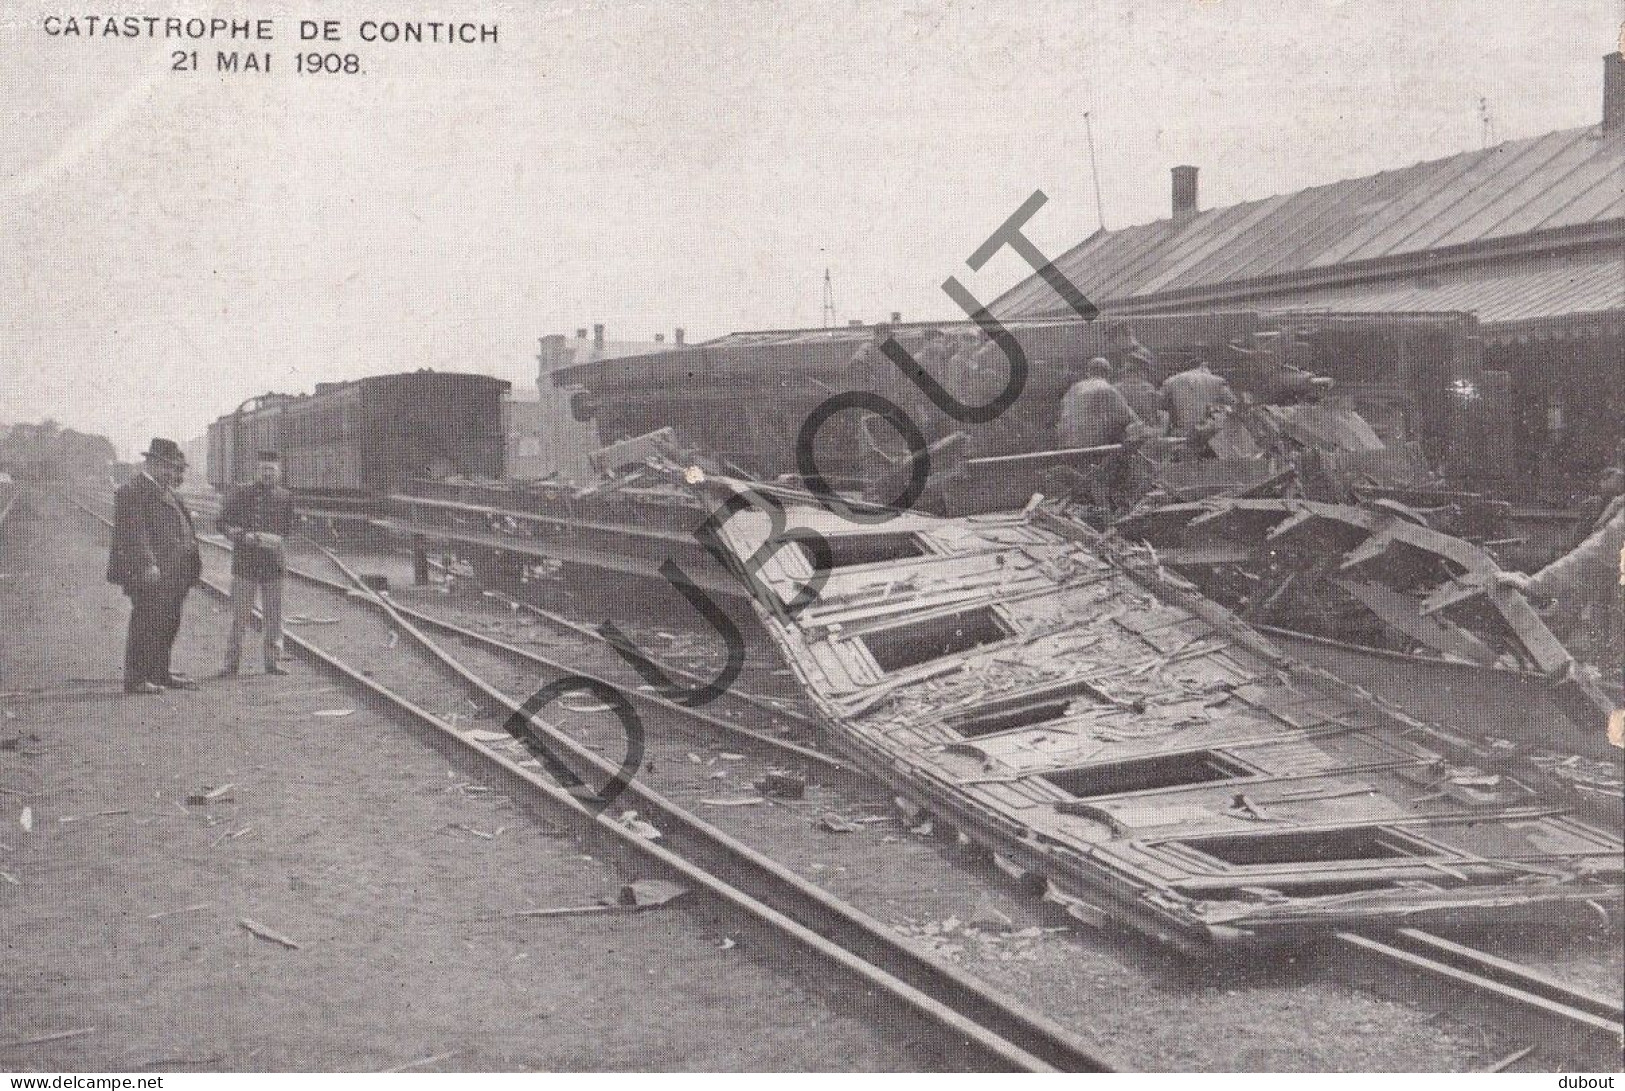 6 Postkaarten /Cartes Postales - Kontich Spoorwegramp 21 mei 1908 (C5242)